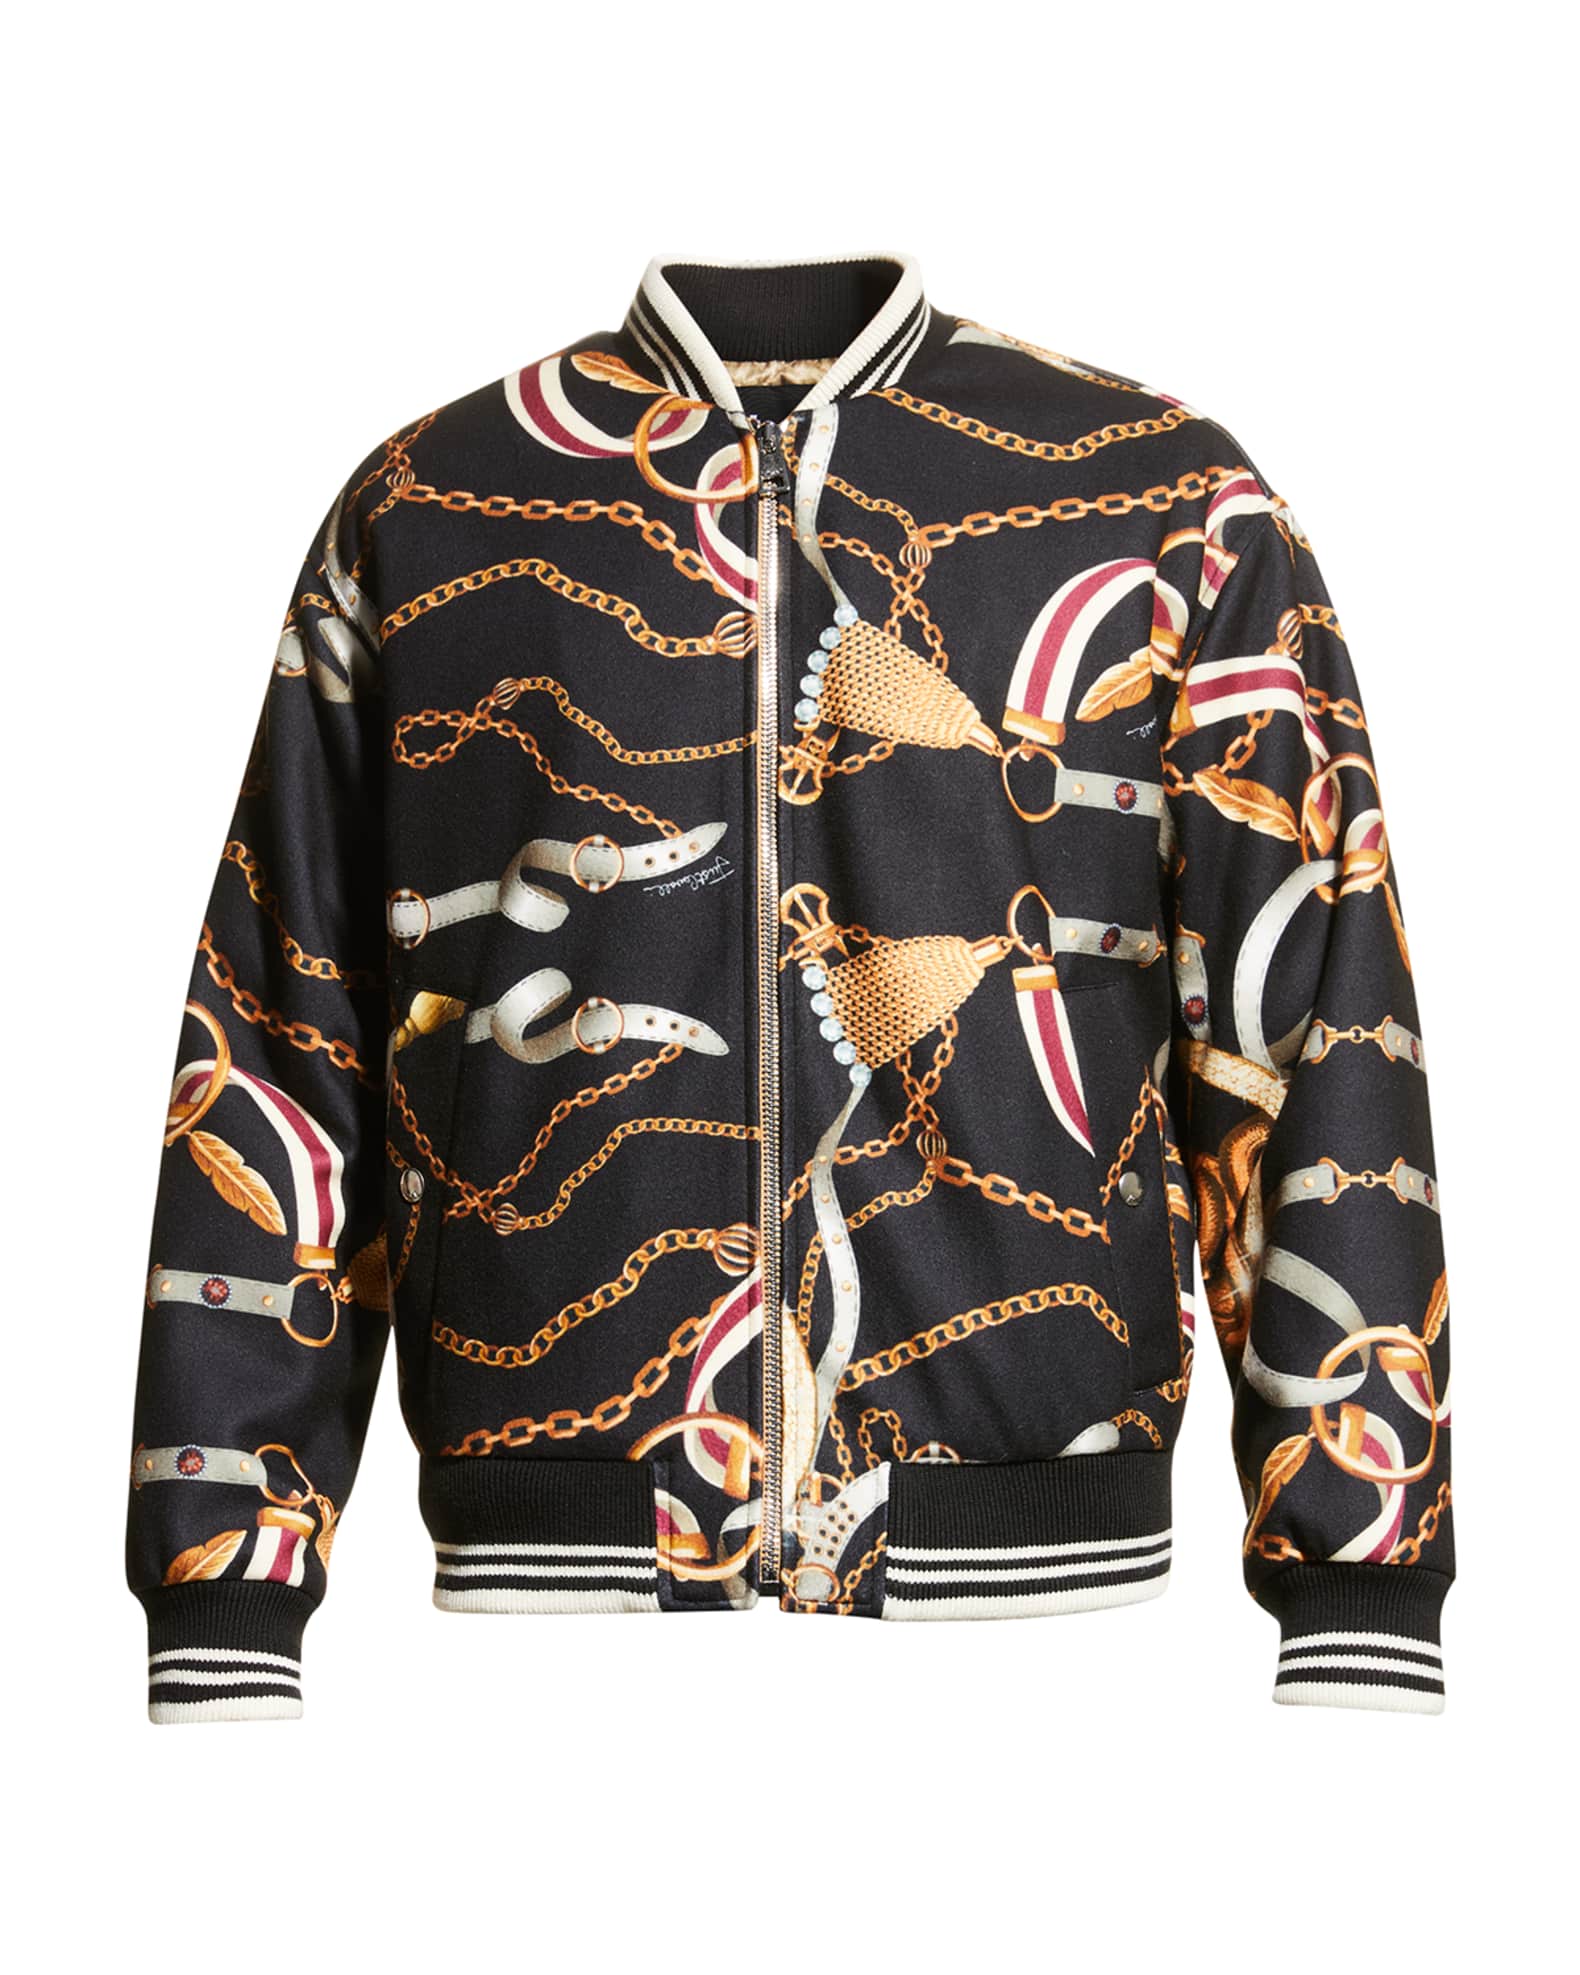 Just Cavalli Men's Chain Graphic Bomber Jacket | Neiman Marcus